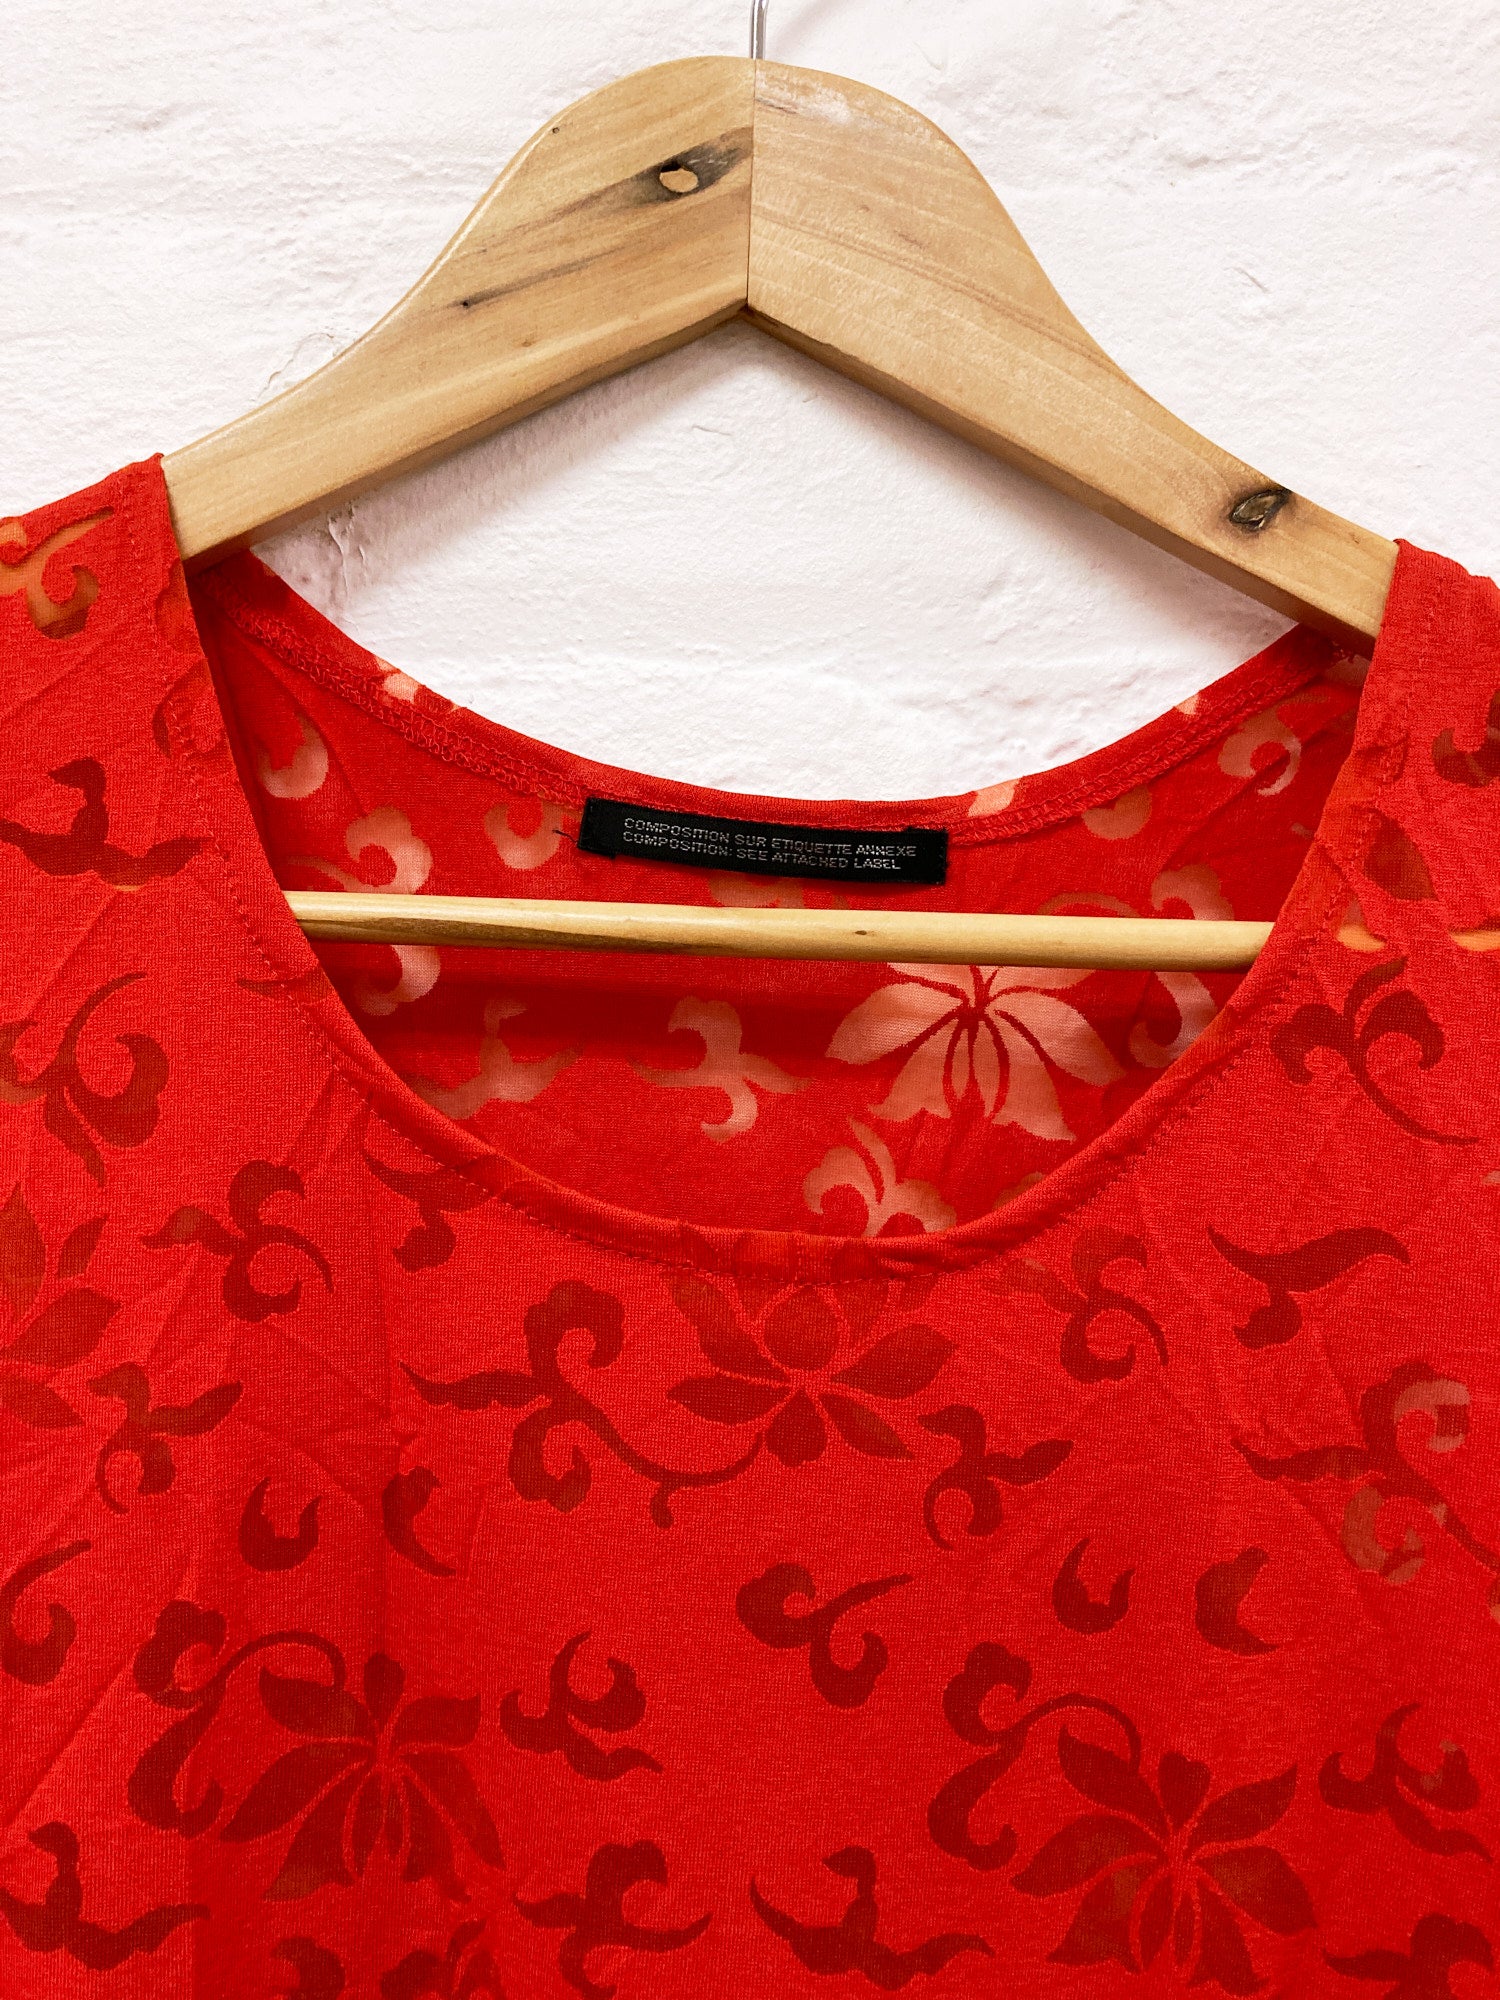 Yohji Yamamoto red rayon semi sheer floral burnout sleeveless top - M